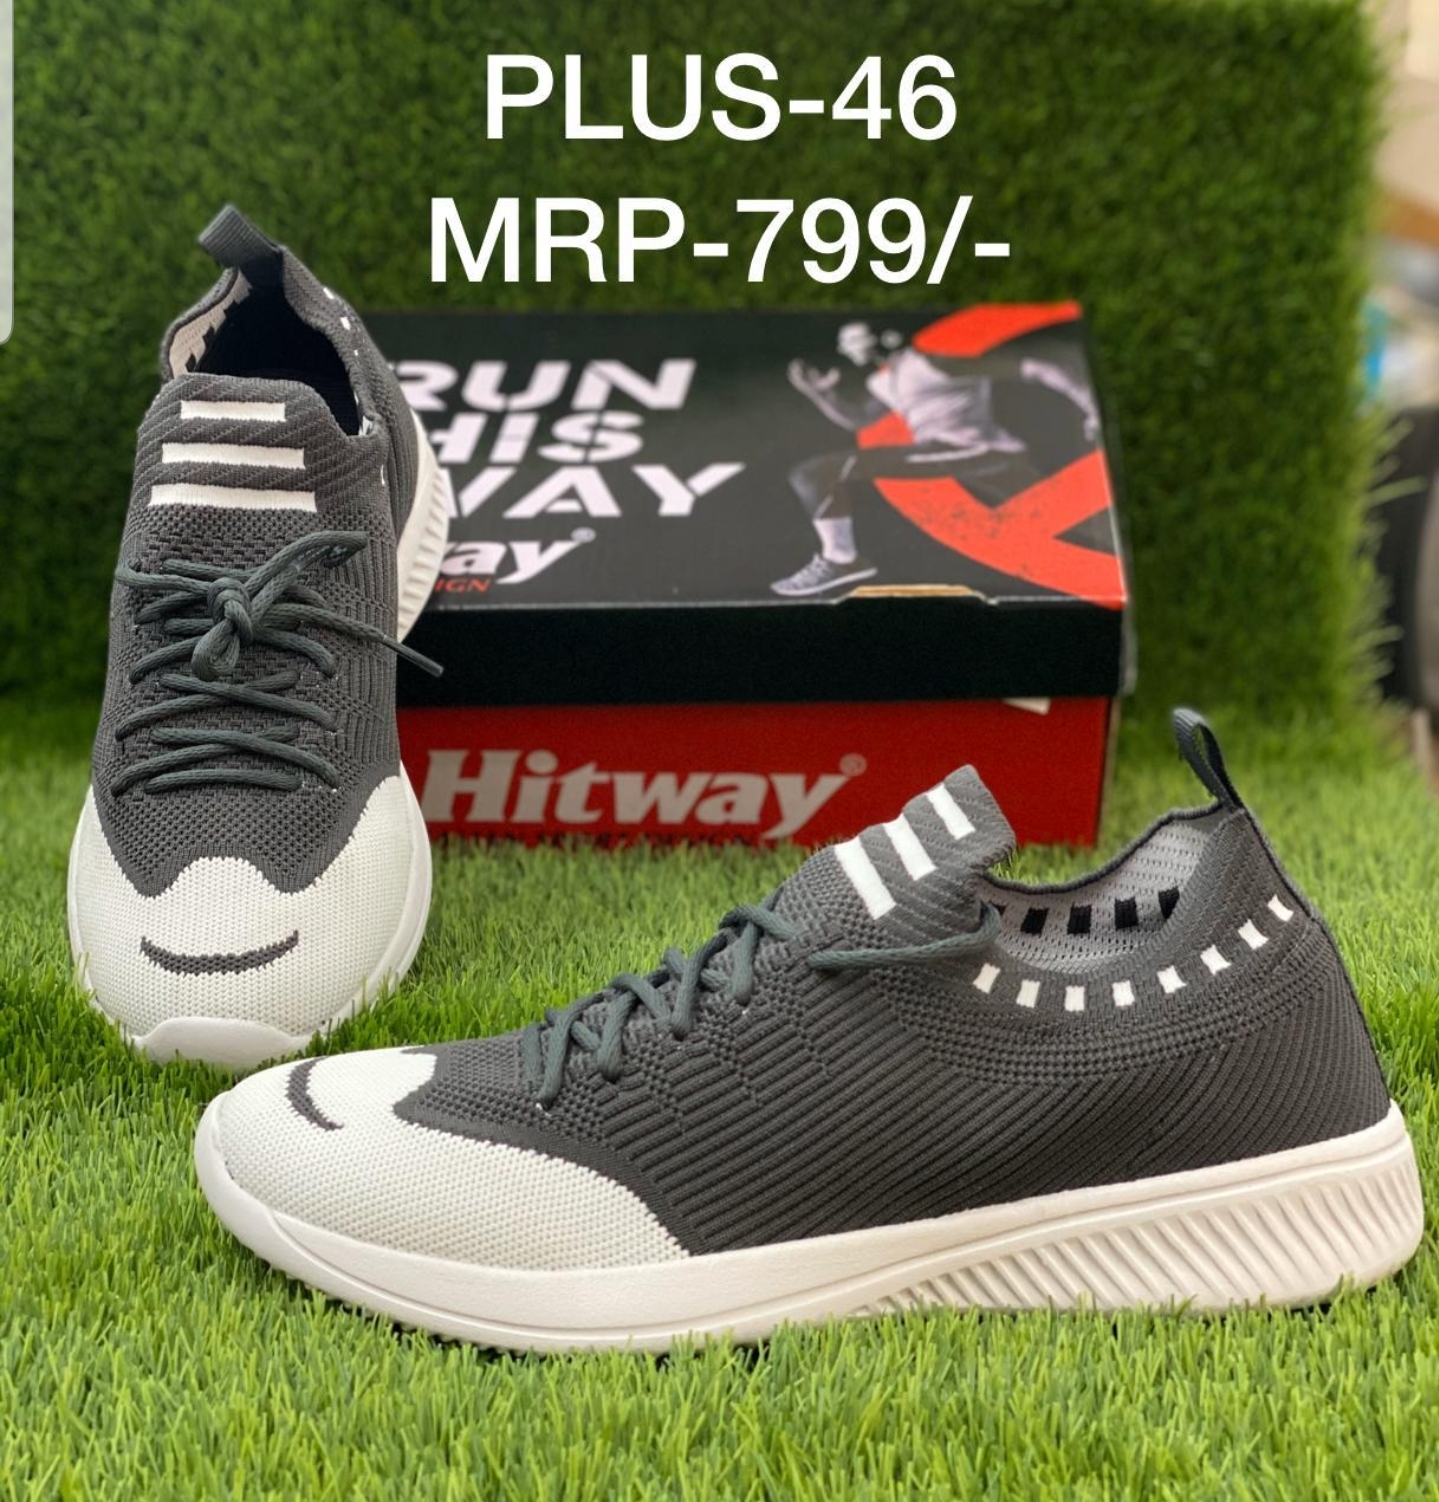 hitway shoes price